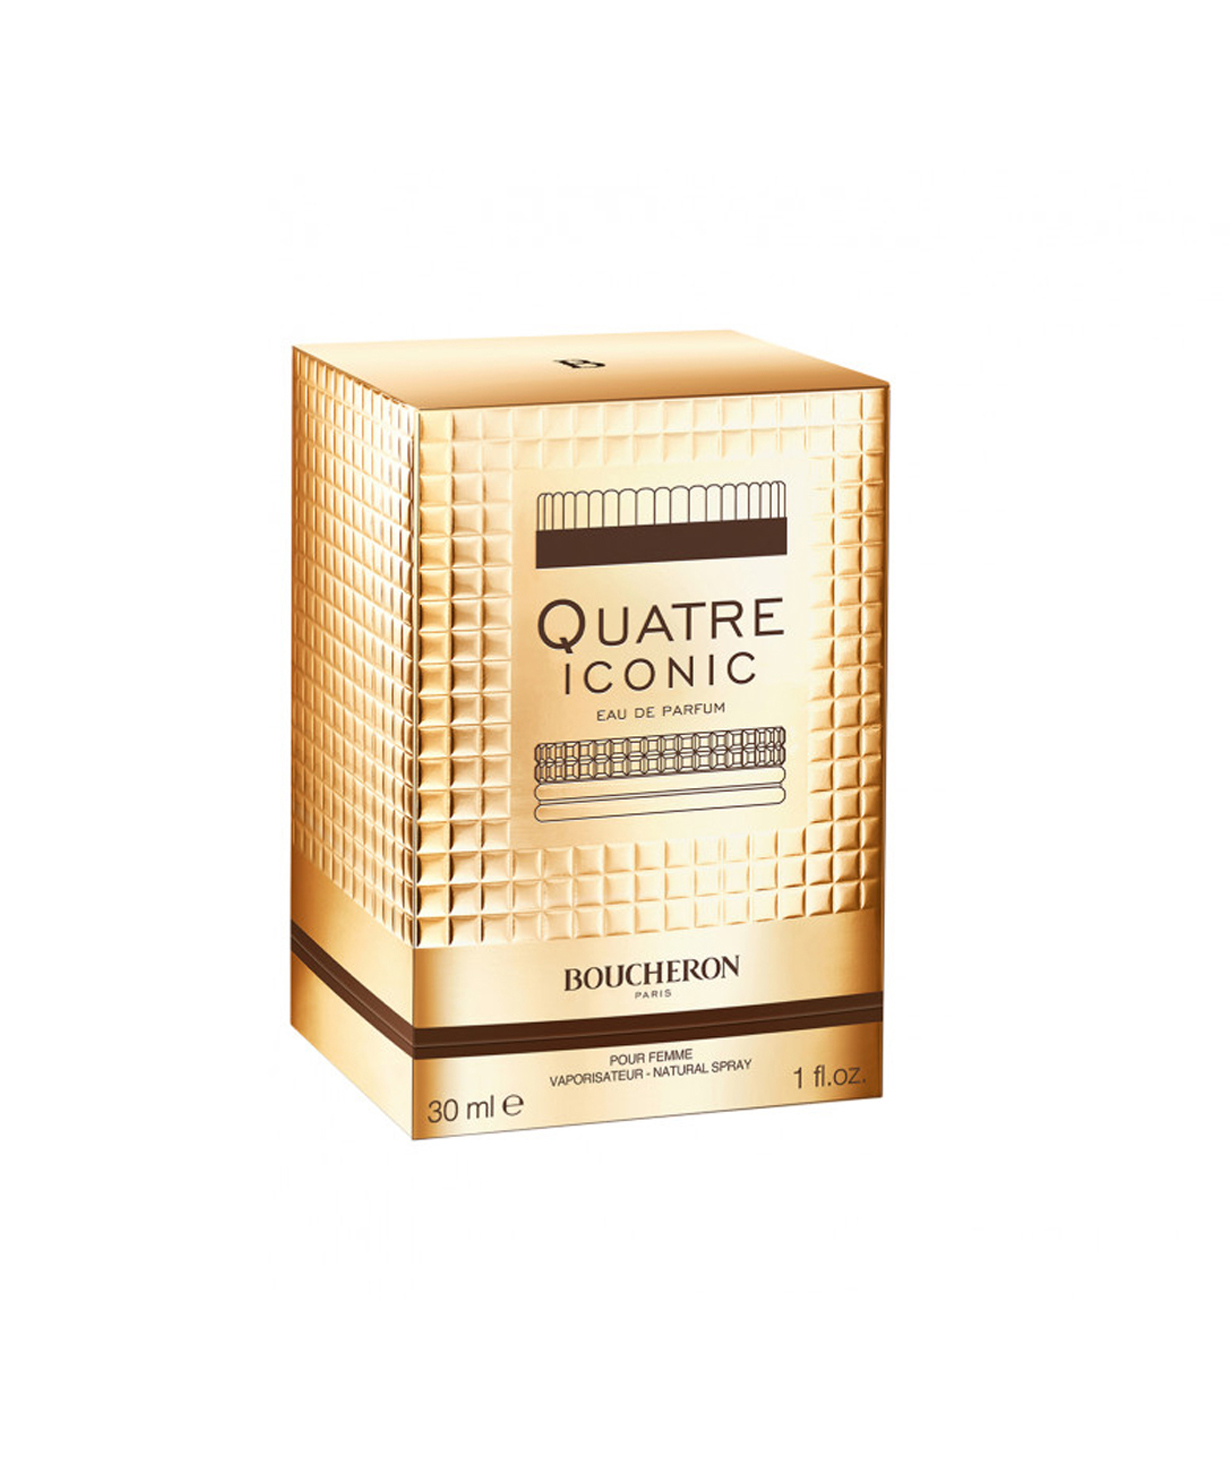 Perfume «Boucheron» Quatre Iconic, for women, 30 ml